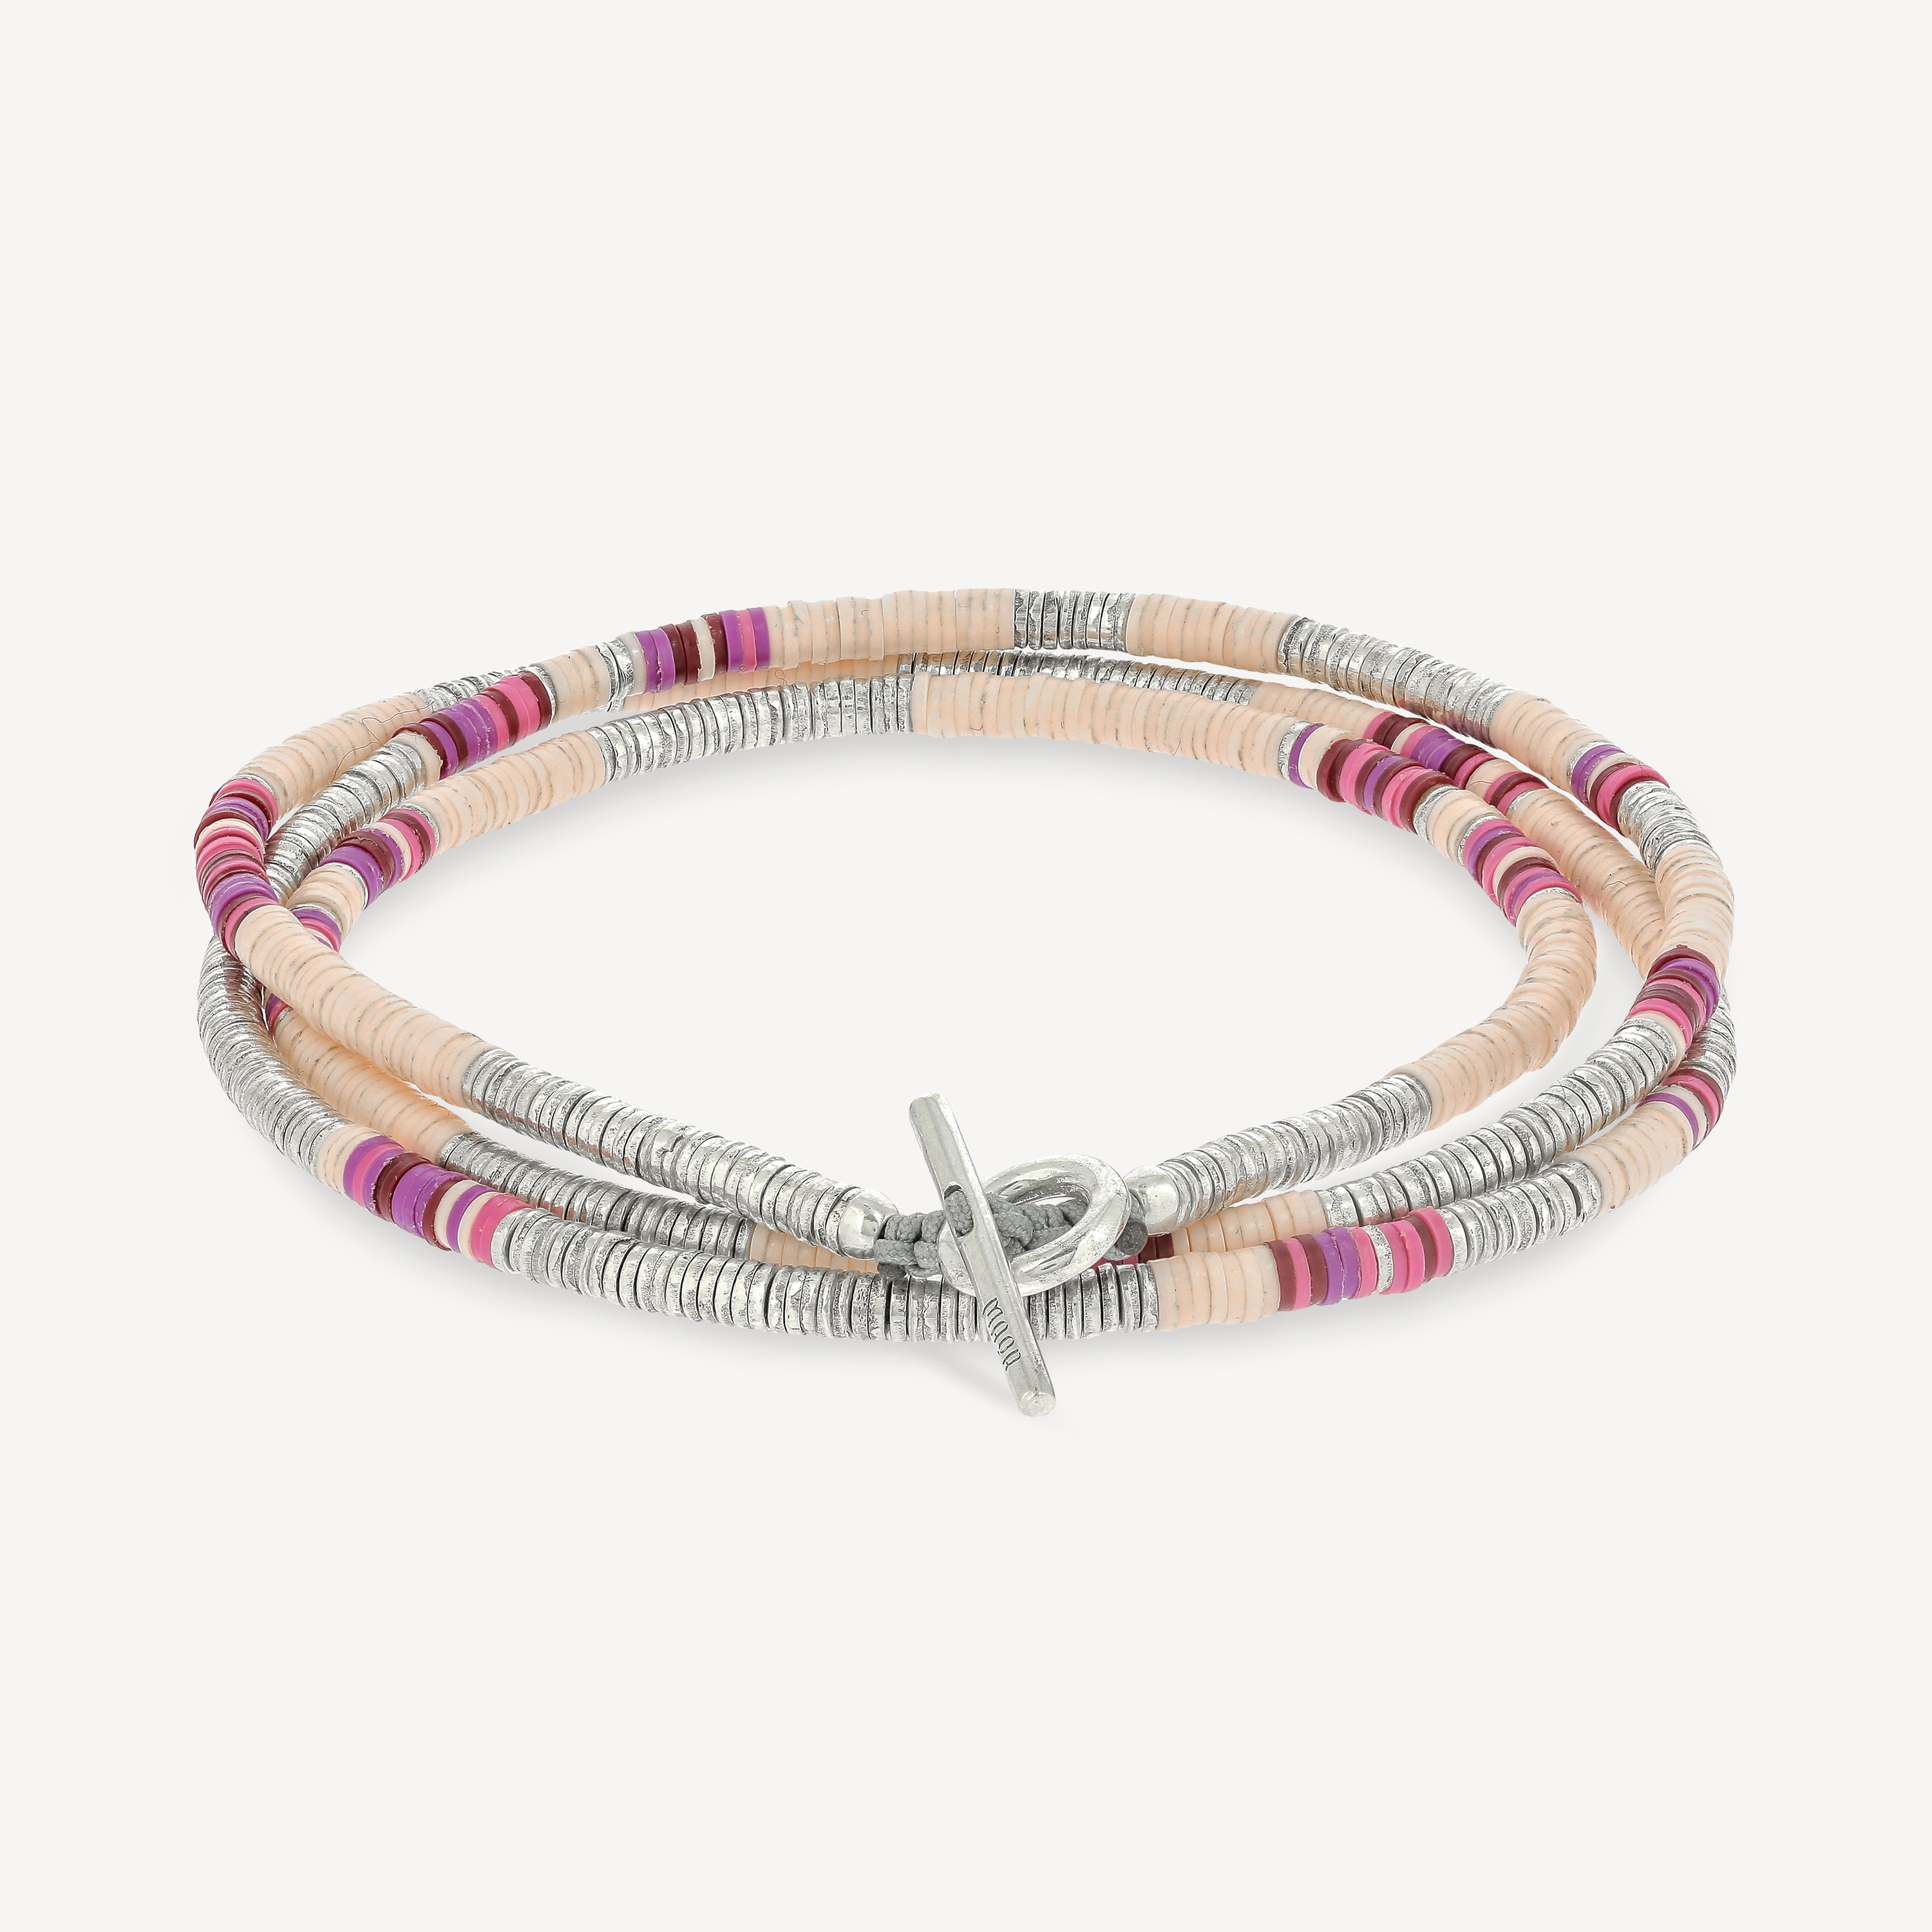 Handmade Natural Pink Opal Stone Leather Wrap Bracelet